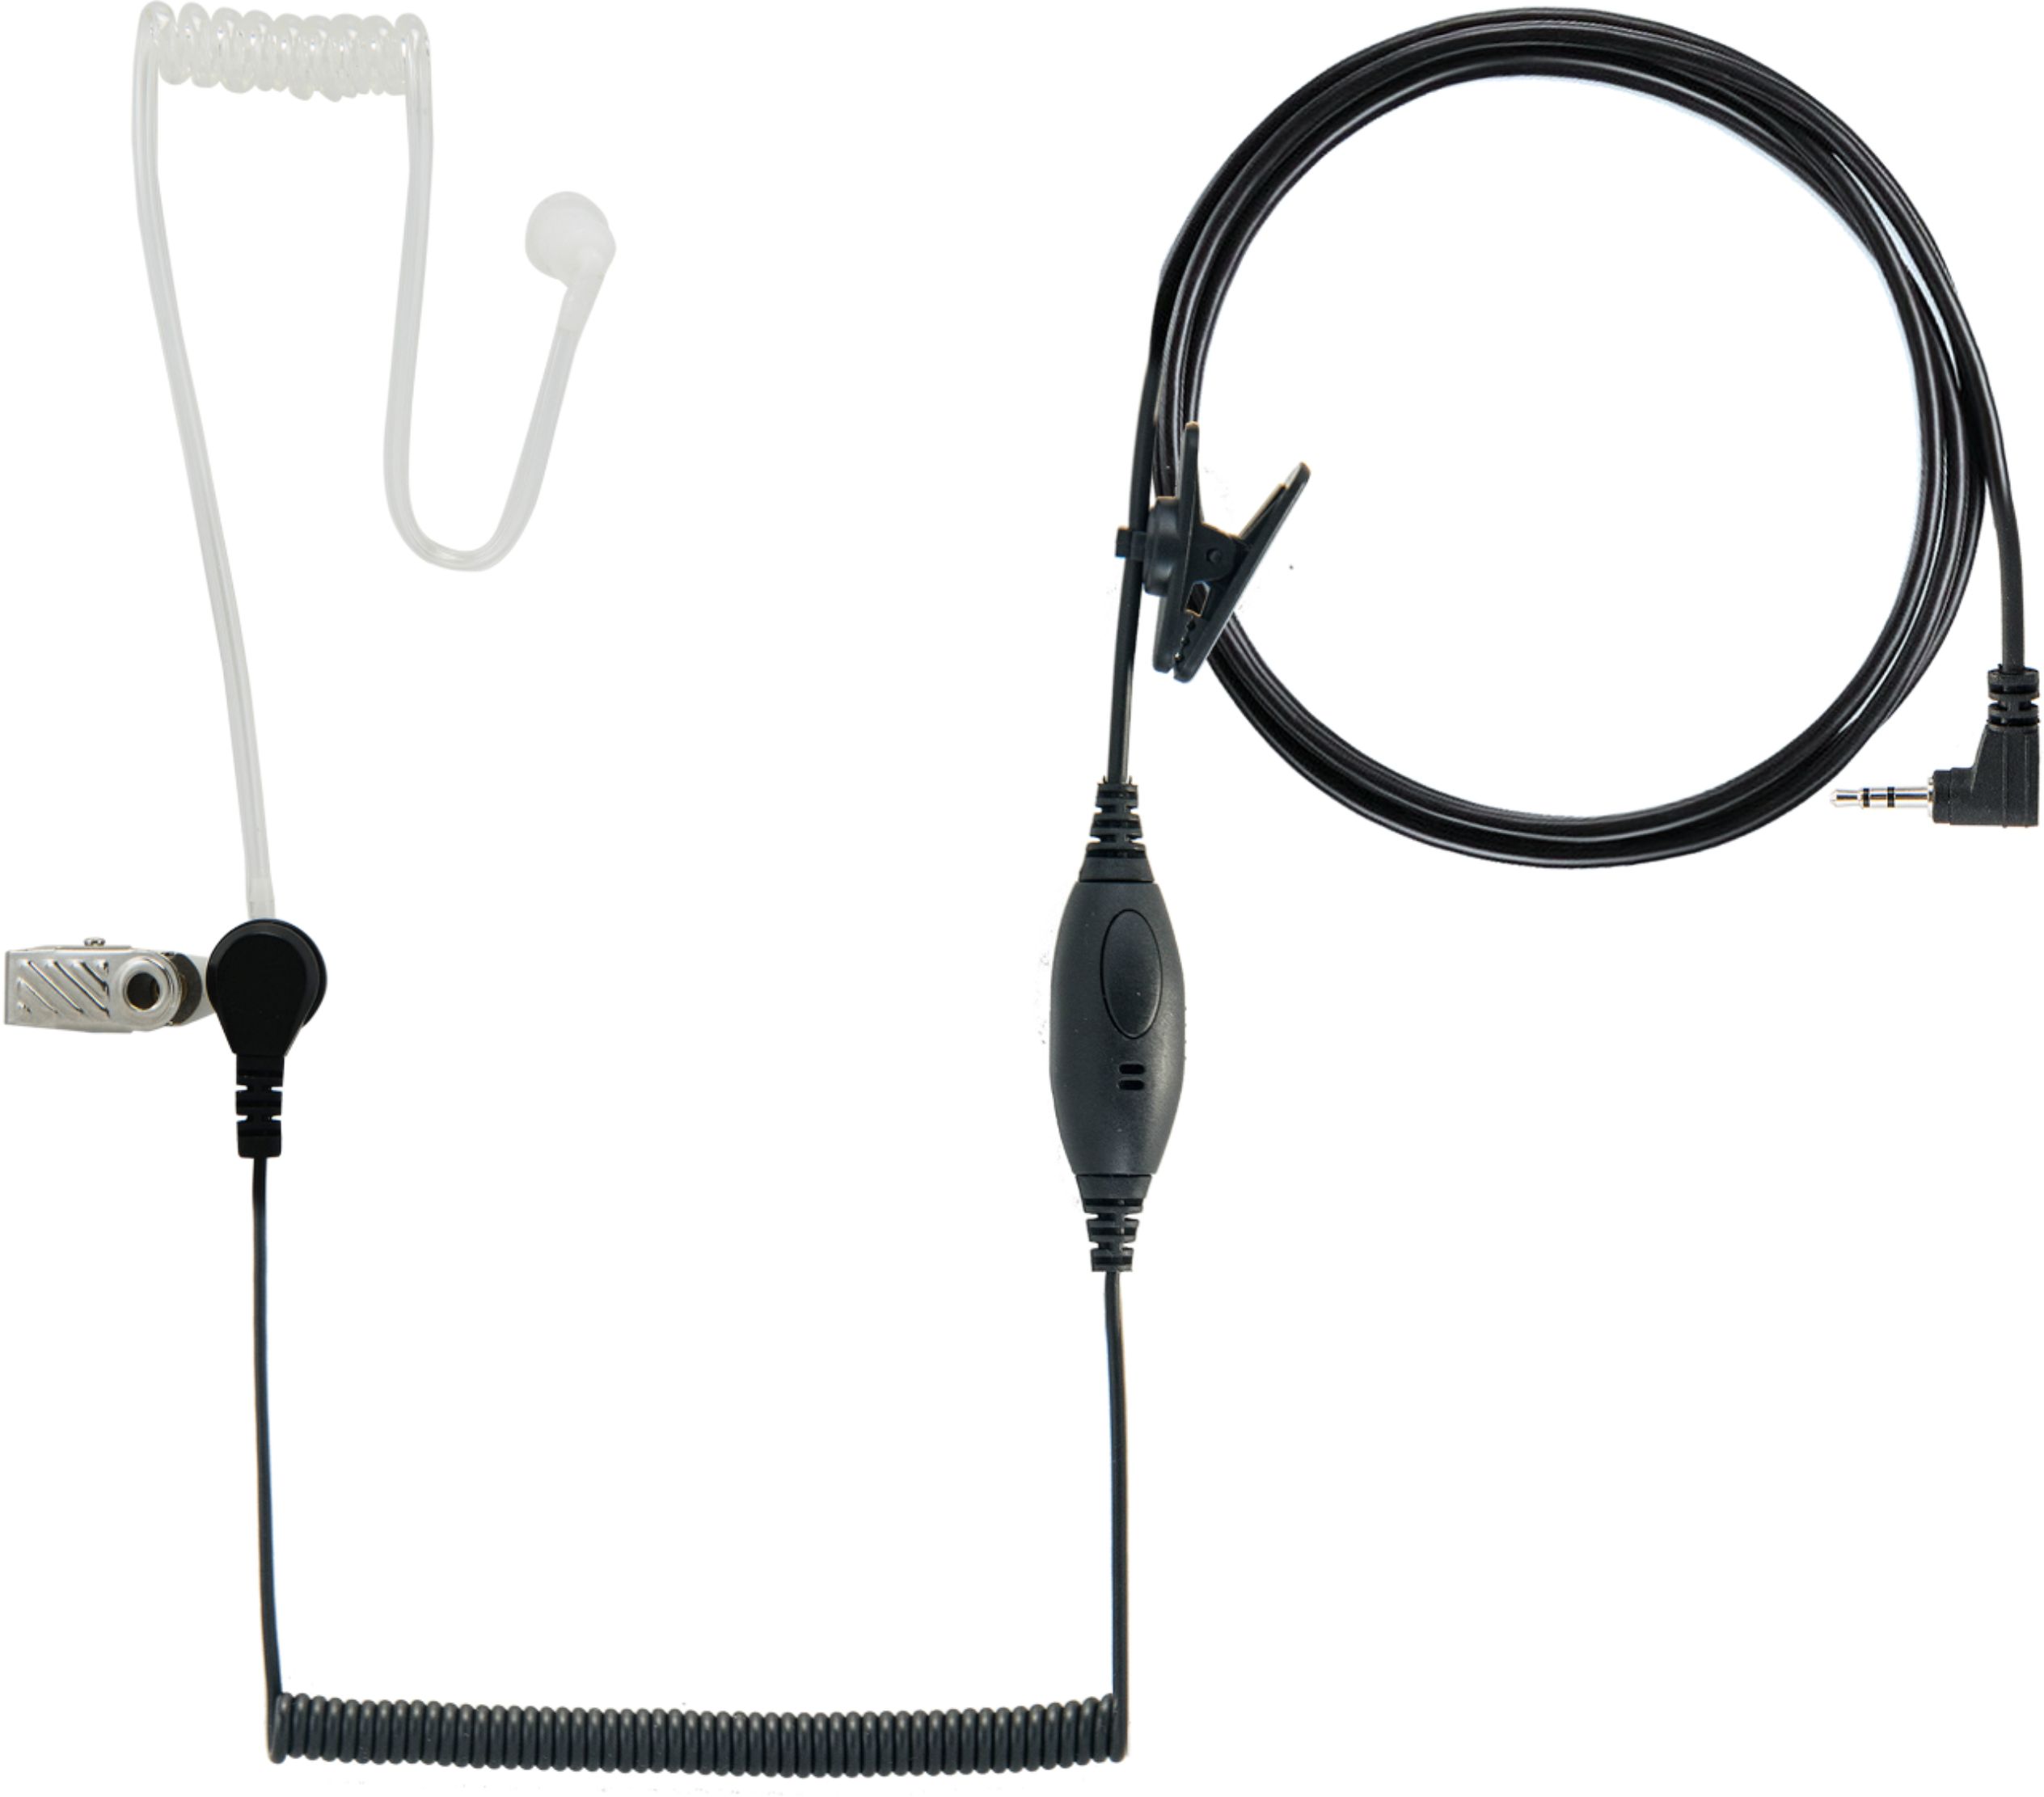 Angle View: Cobra - Surveillance Headset (2-pack) - Black